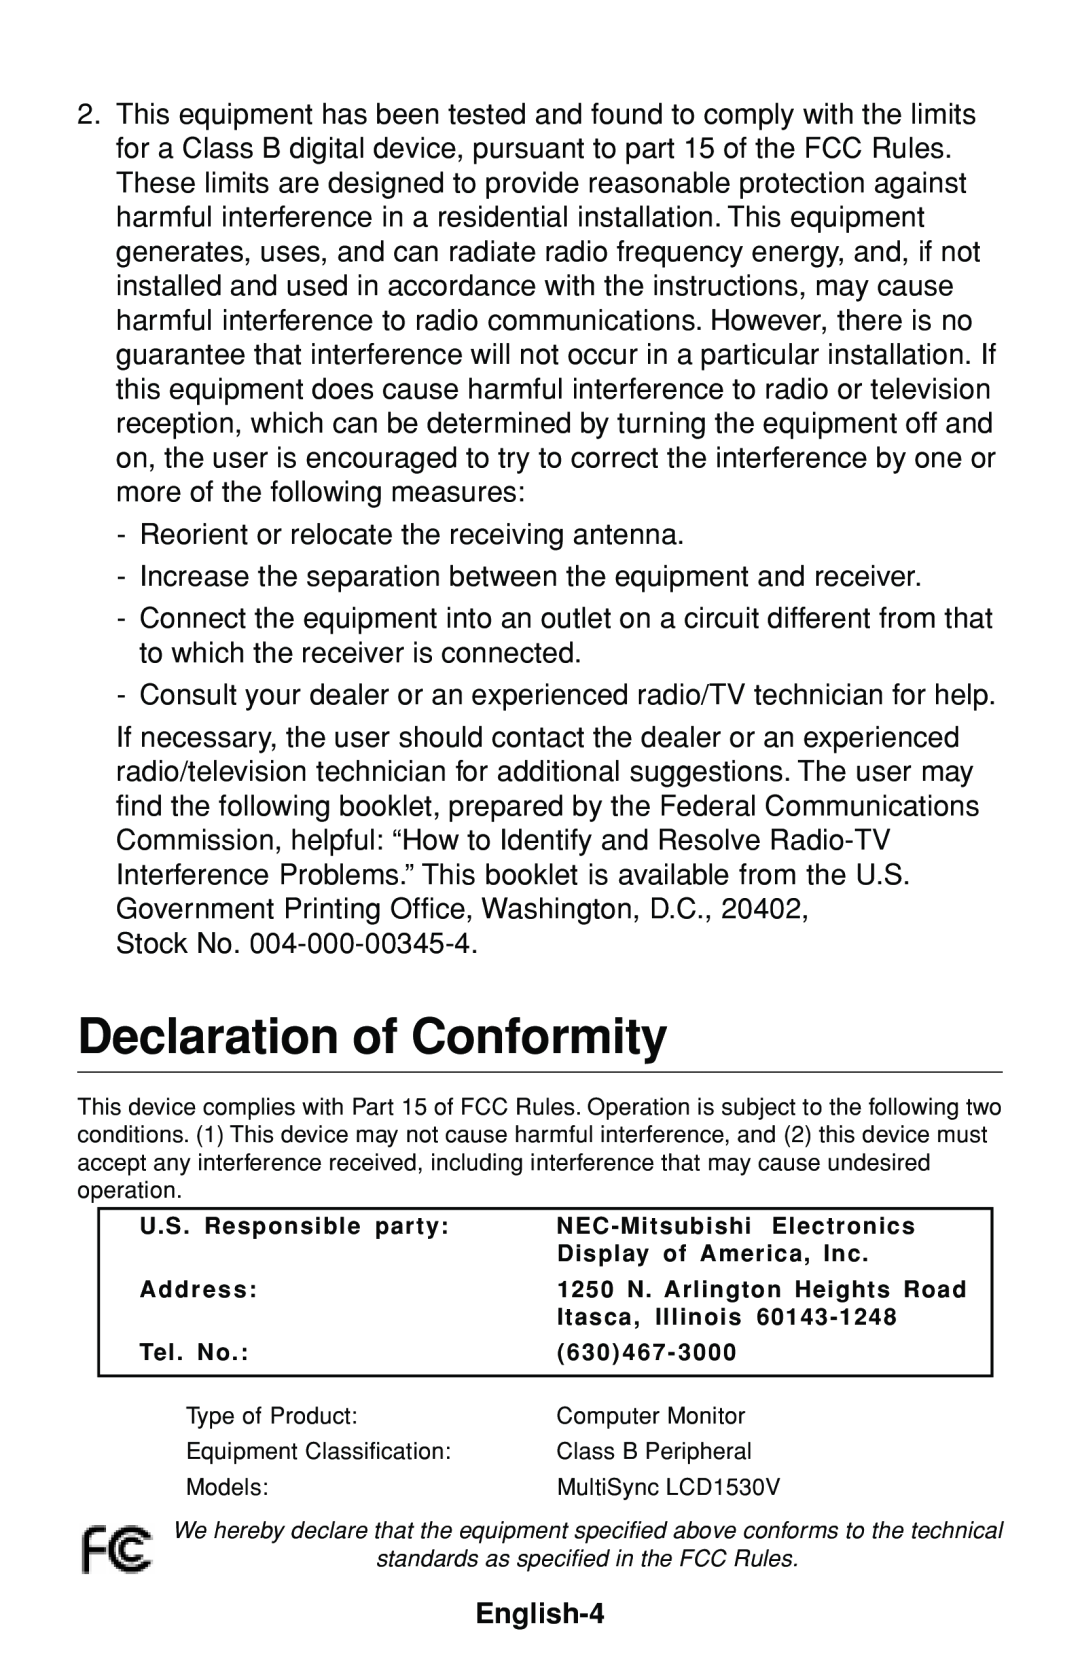 NEC LCD1530V user manual Declaration of Conformity, English-4 